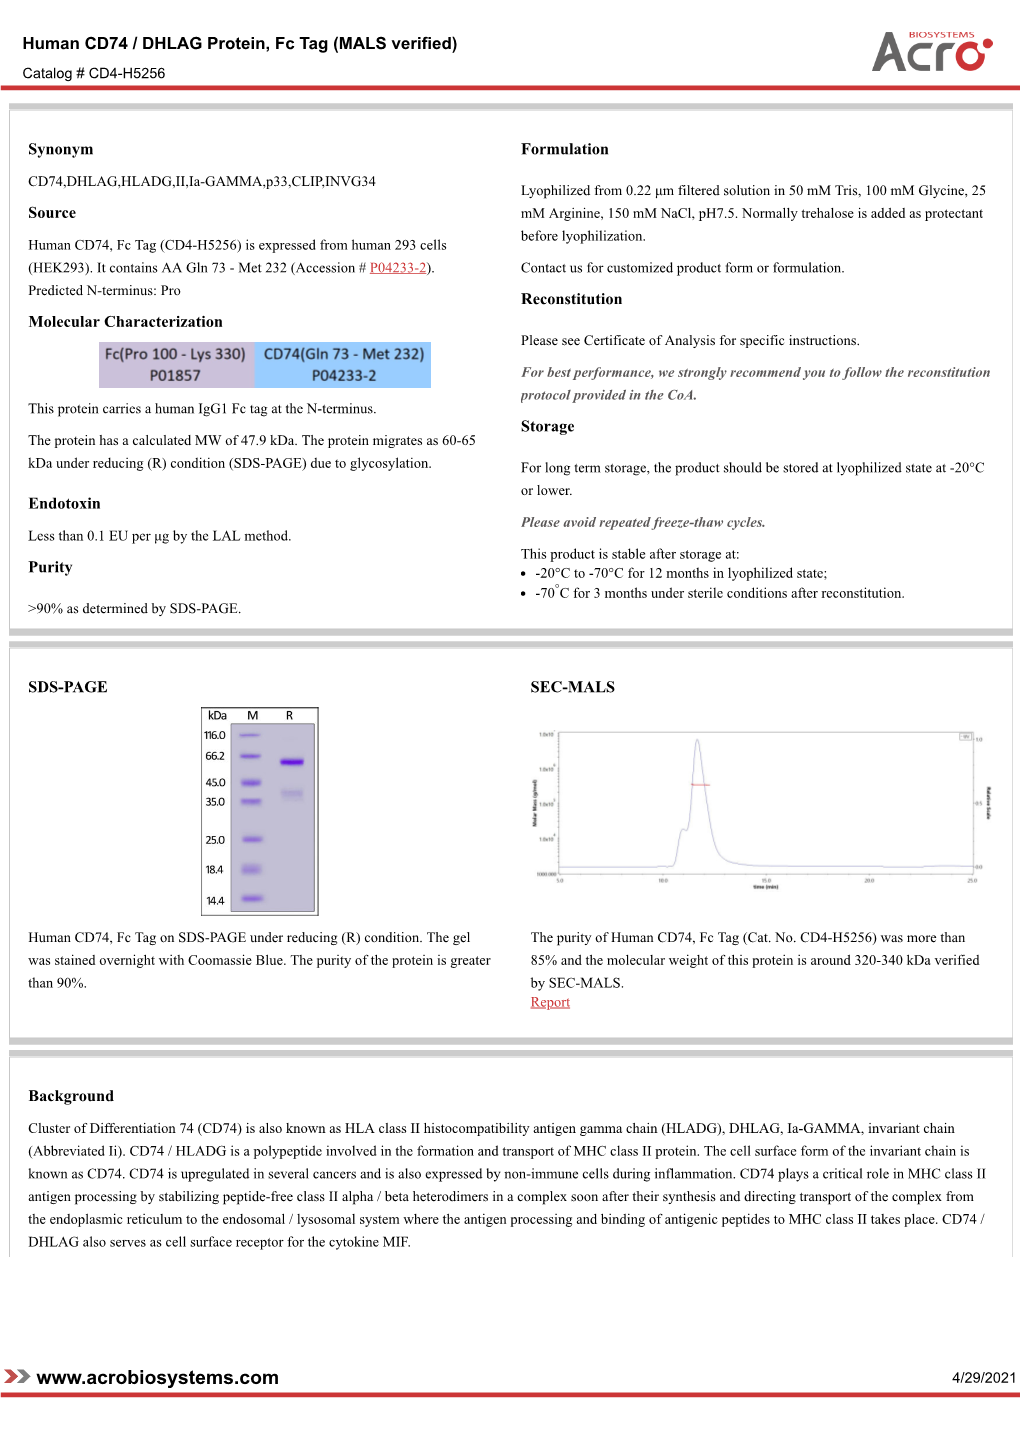 4/29/2021 Human CD74 / DHLAG Protein, Fc Tag (MALS Verified) Catalog # CD4-H5256